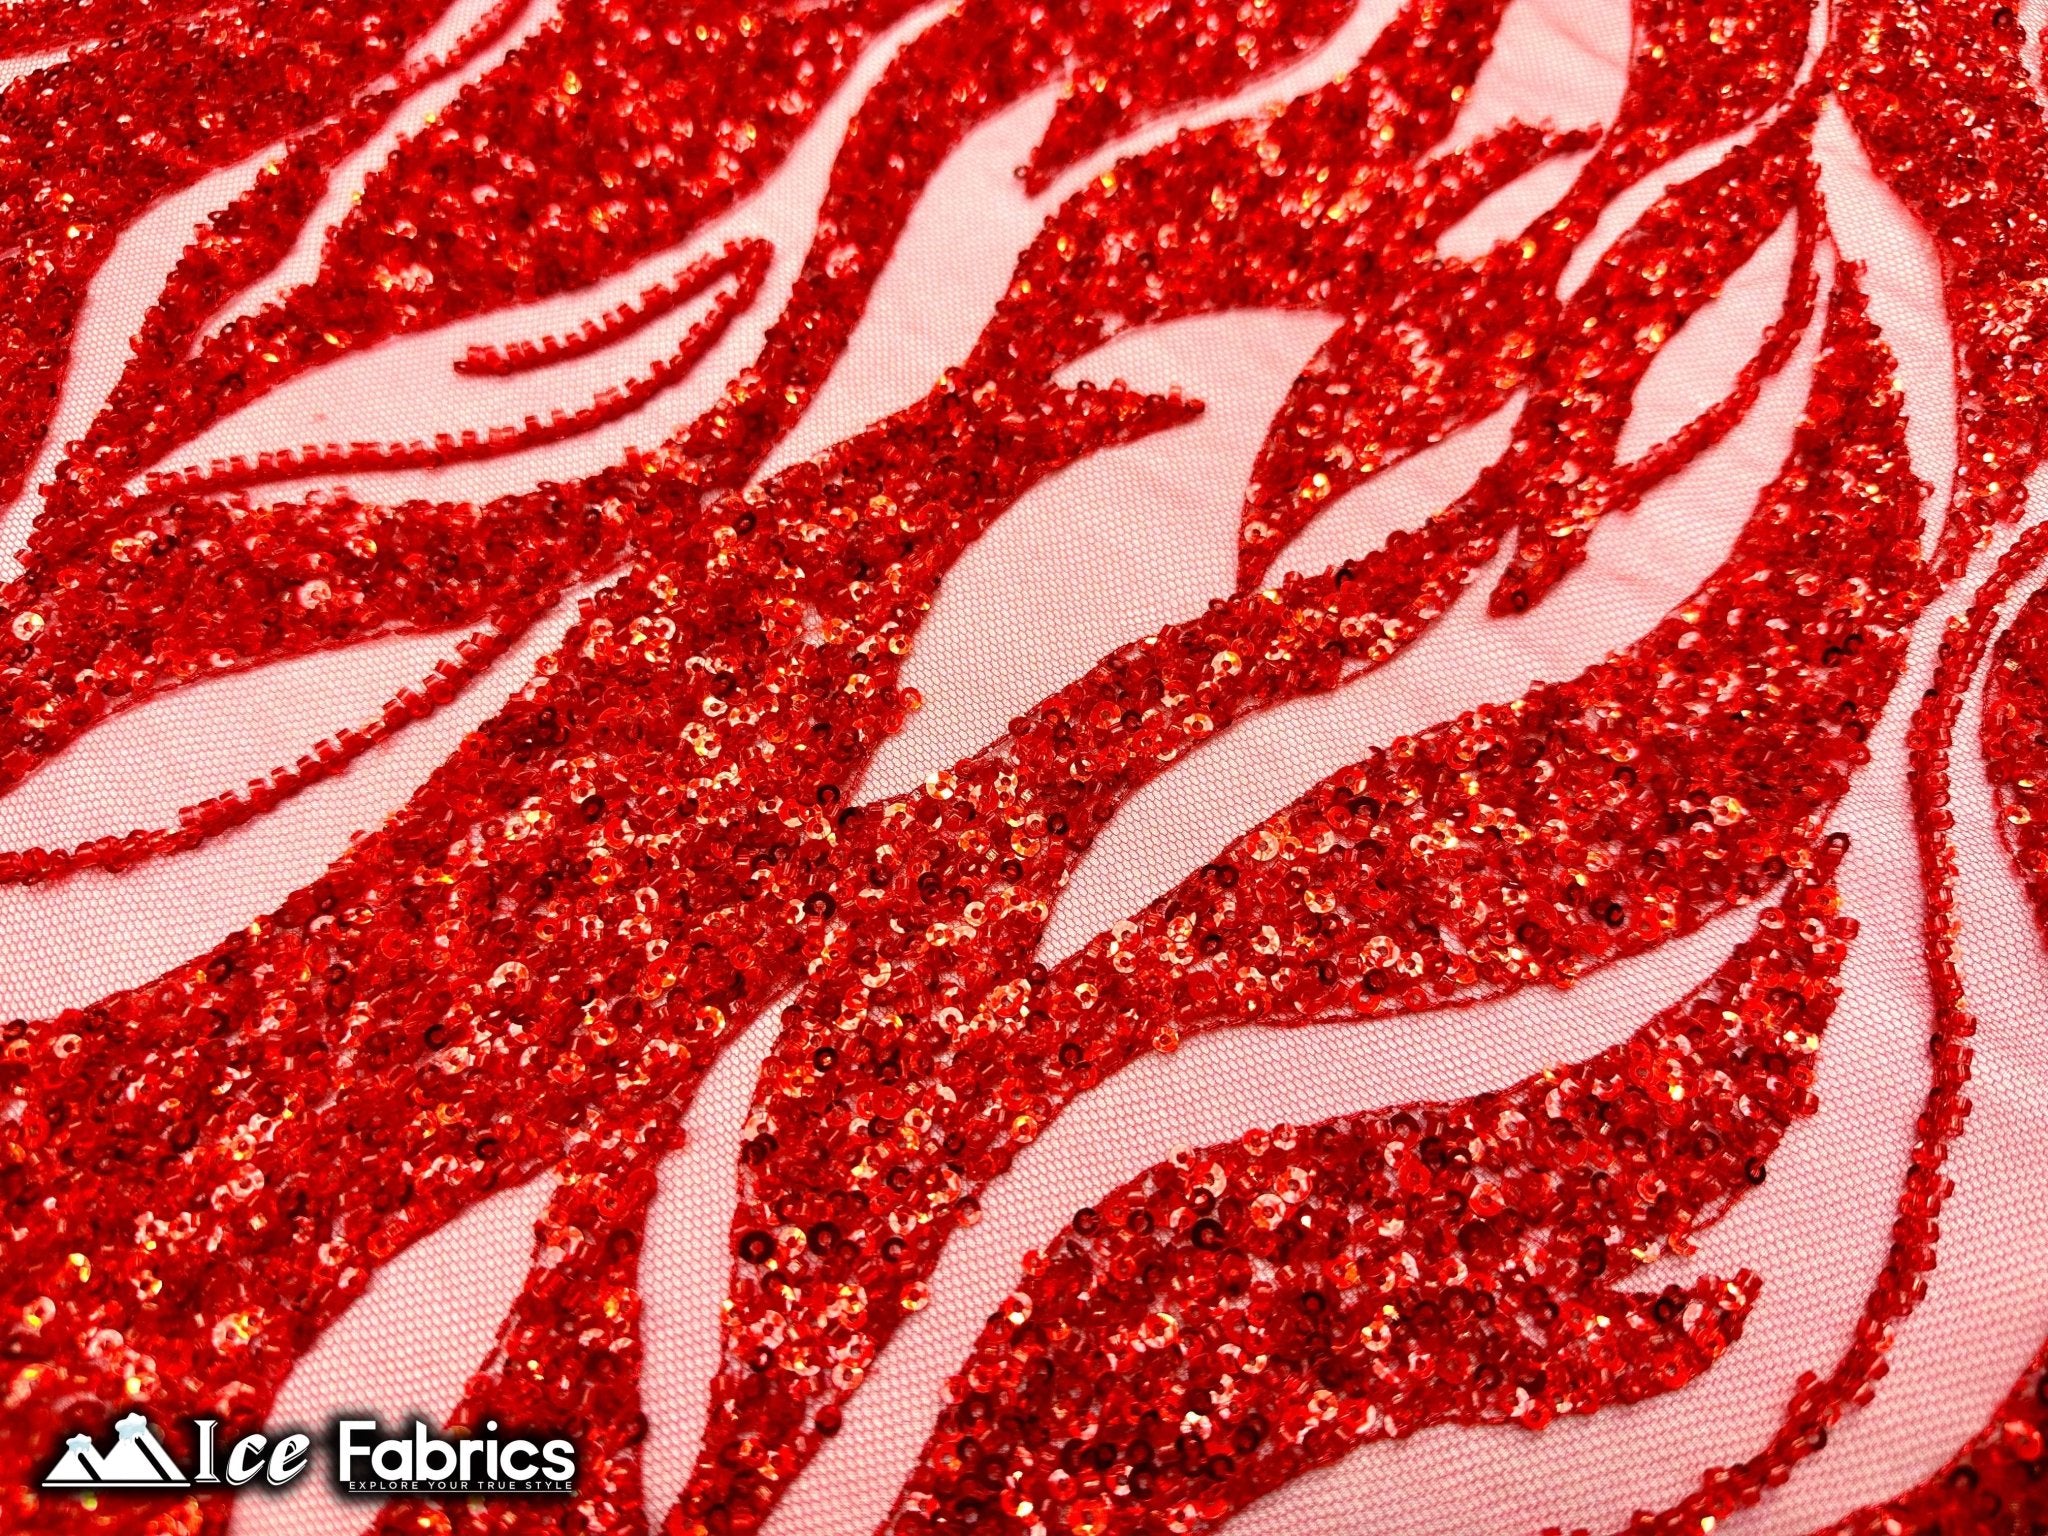 Elegant Heavy Beaded Fabric Lace Fabric with SequinICE FABRICSICE FABRICSRedBy The Yard (54" Wide)Elegant Heavy Beaded Fabric Lace Fabric with Sequin ICE FABRICS Red